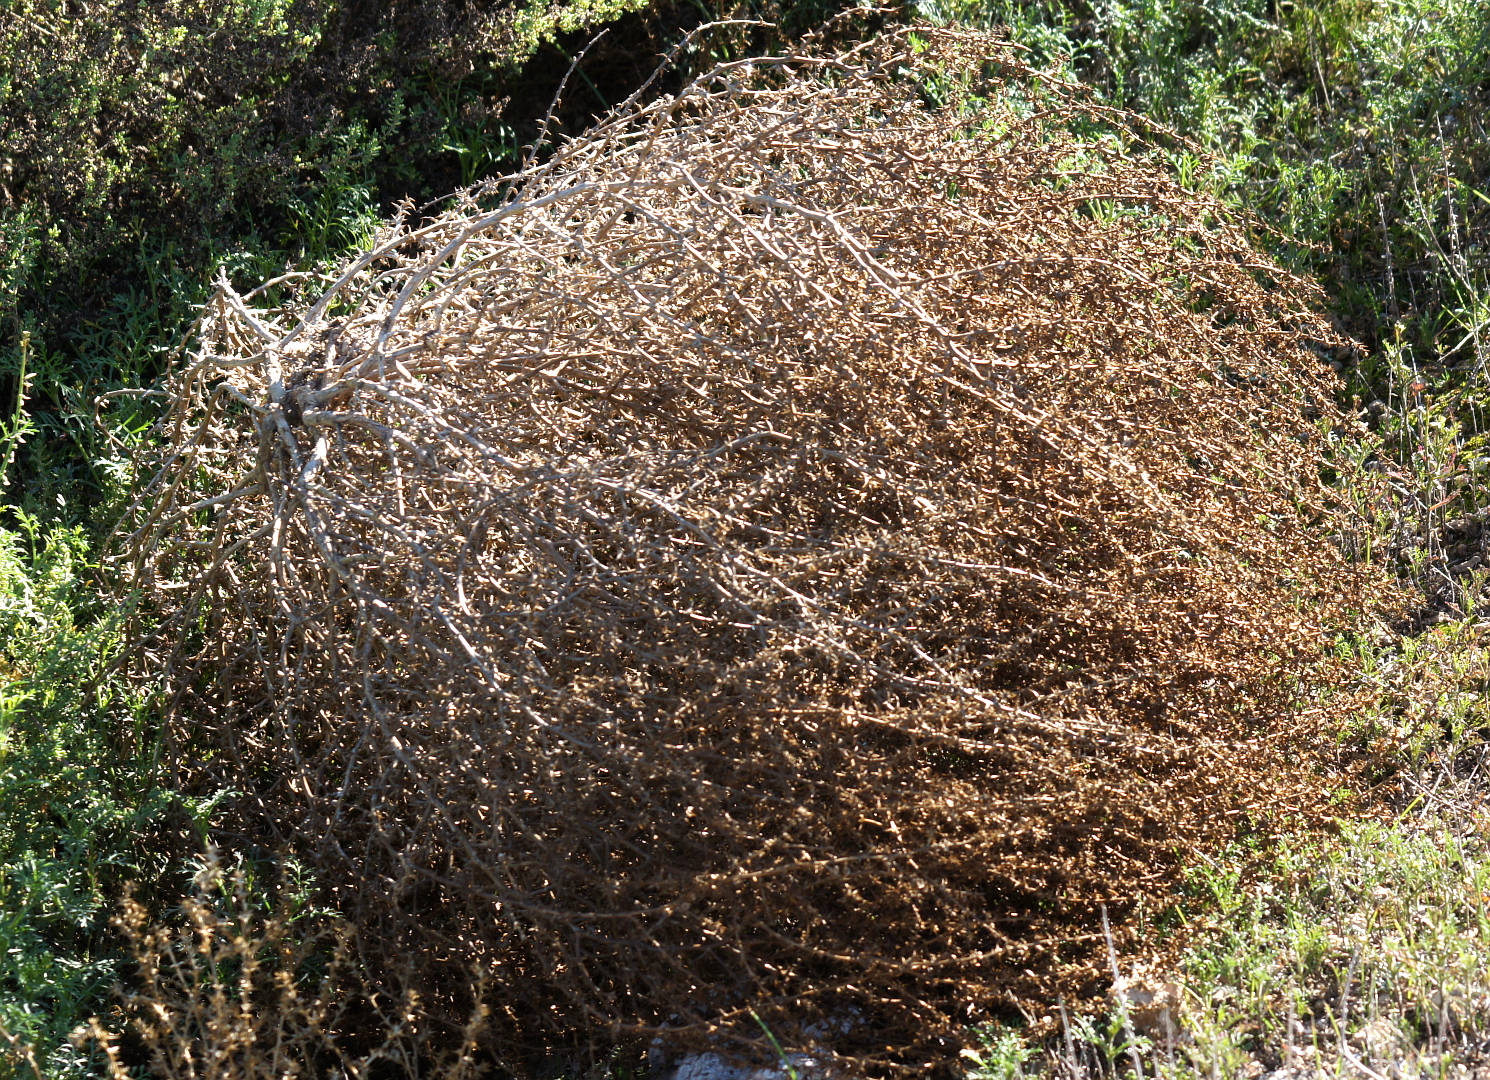 Buckbush (Salsola australis)